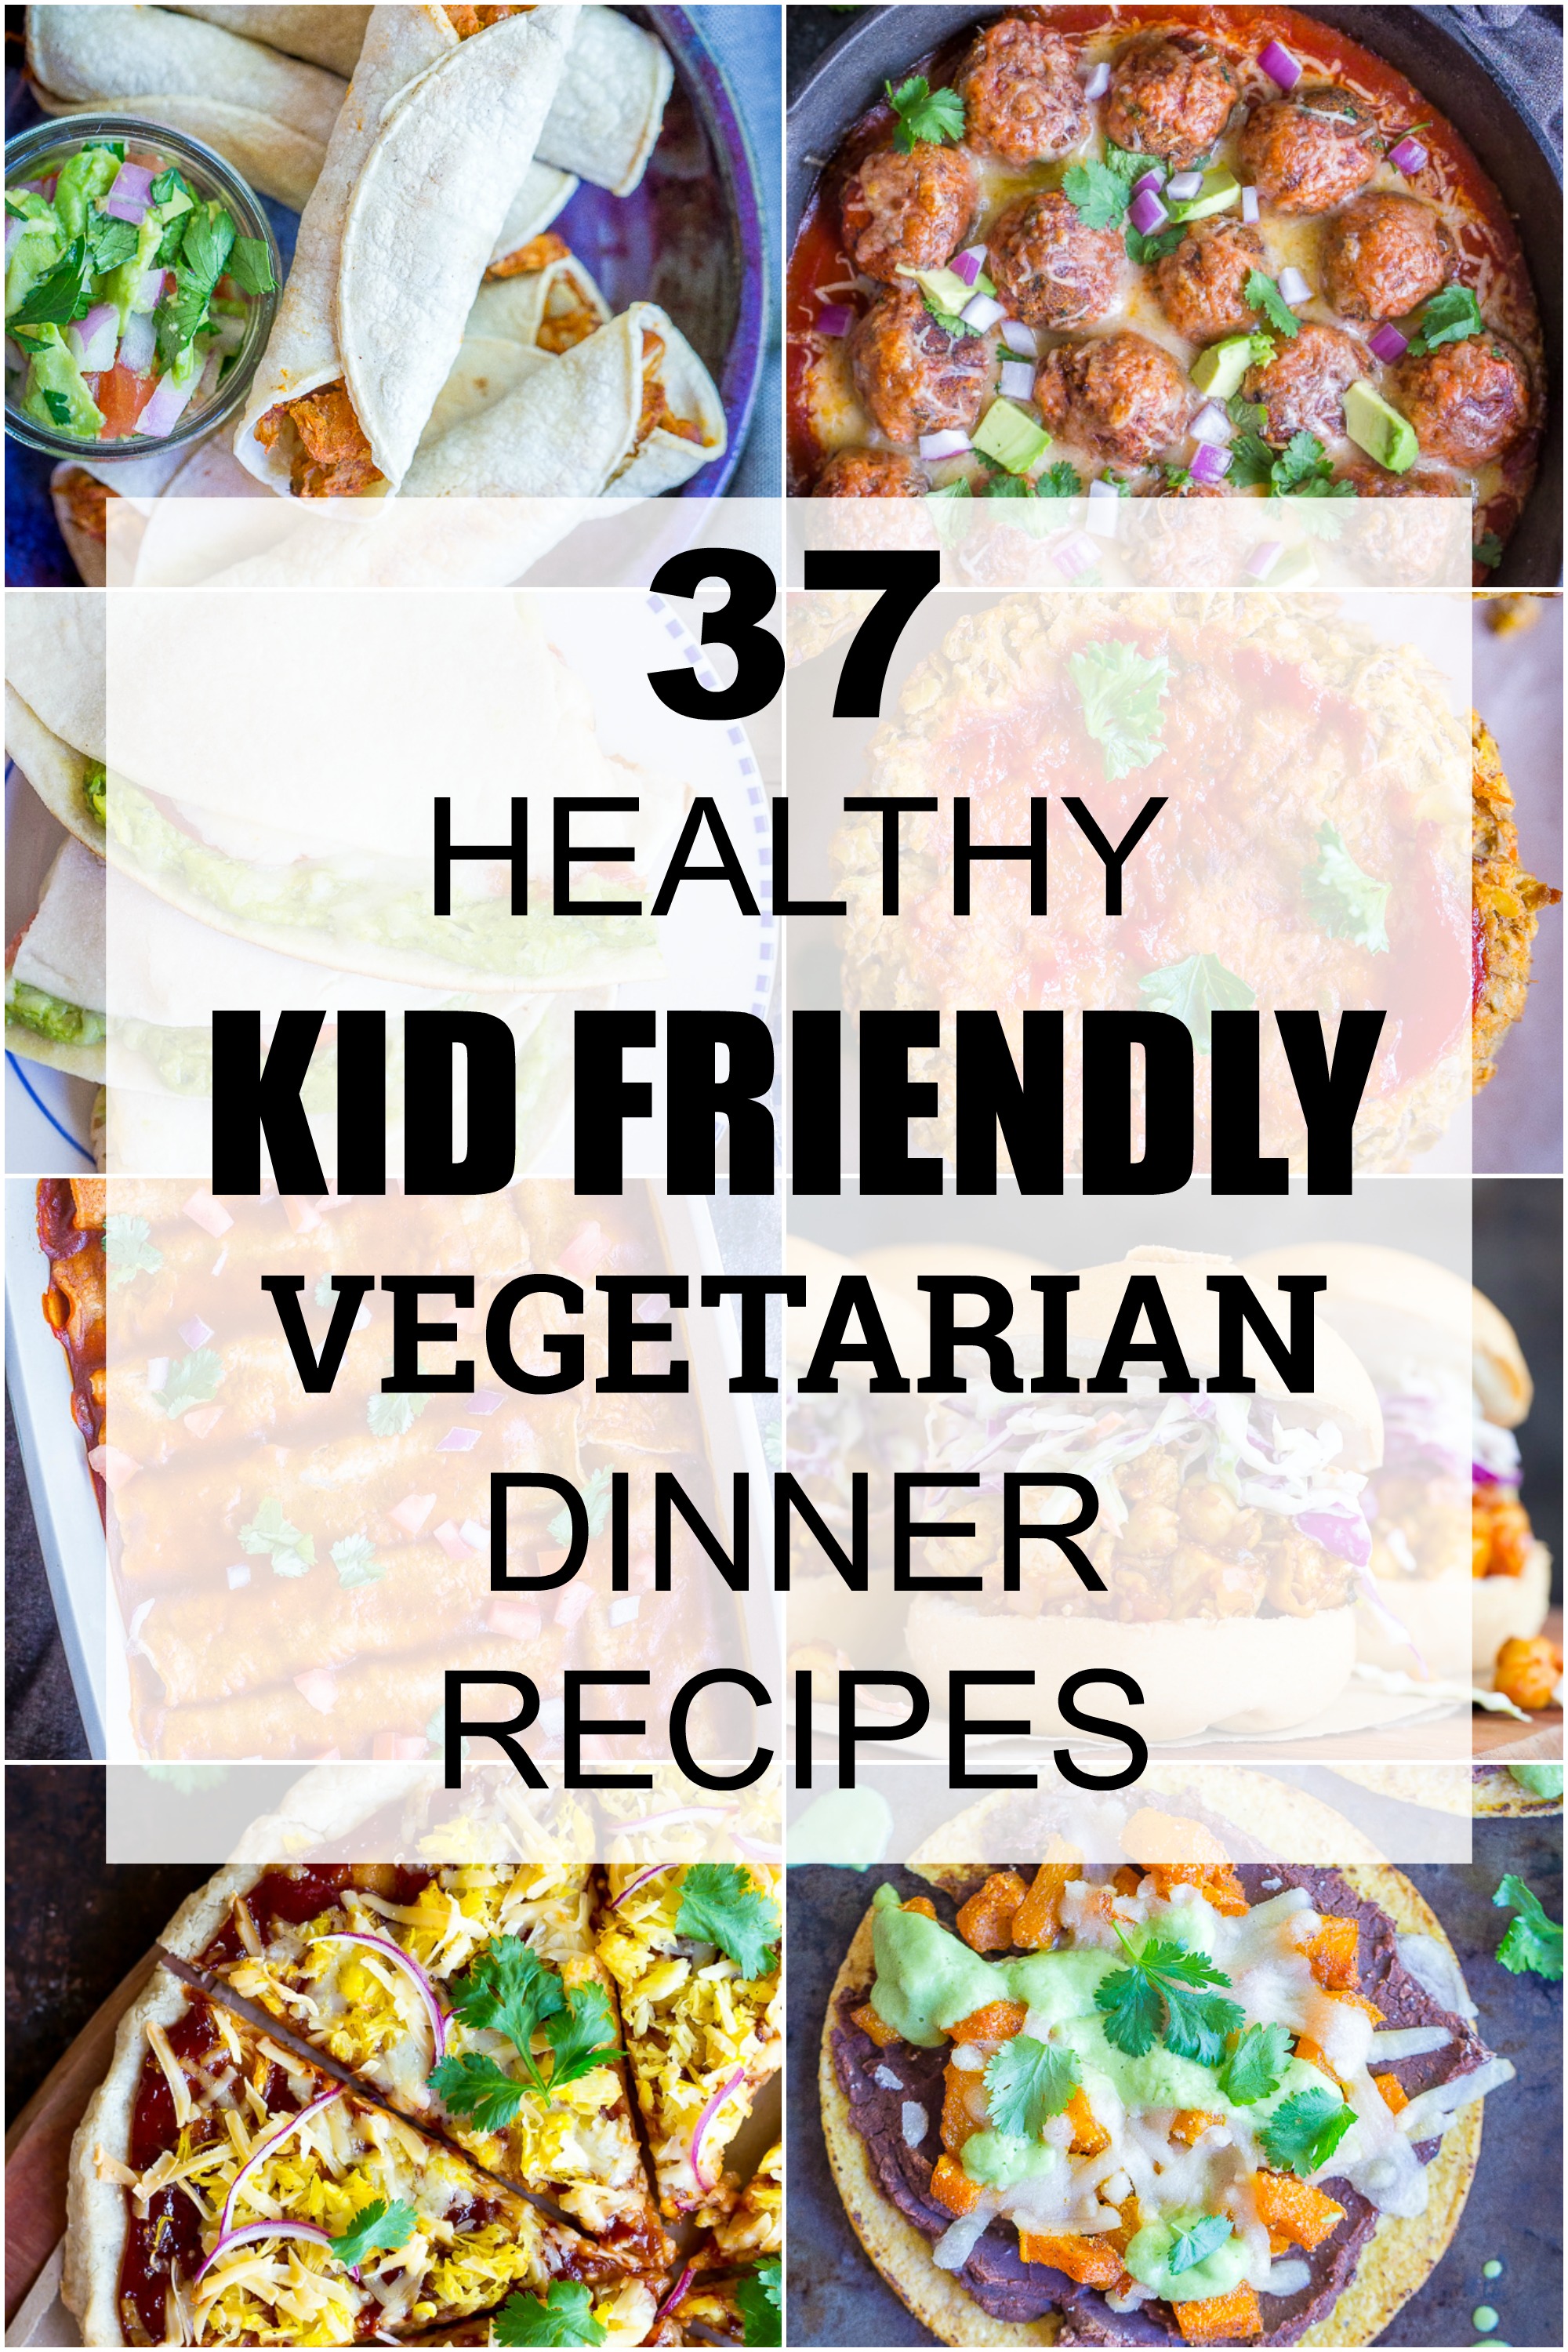 37 Healthy Kid Friendly Vegetarian Dinner Recipes - She ...